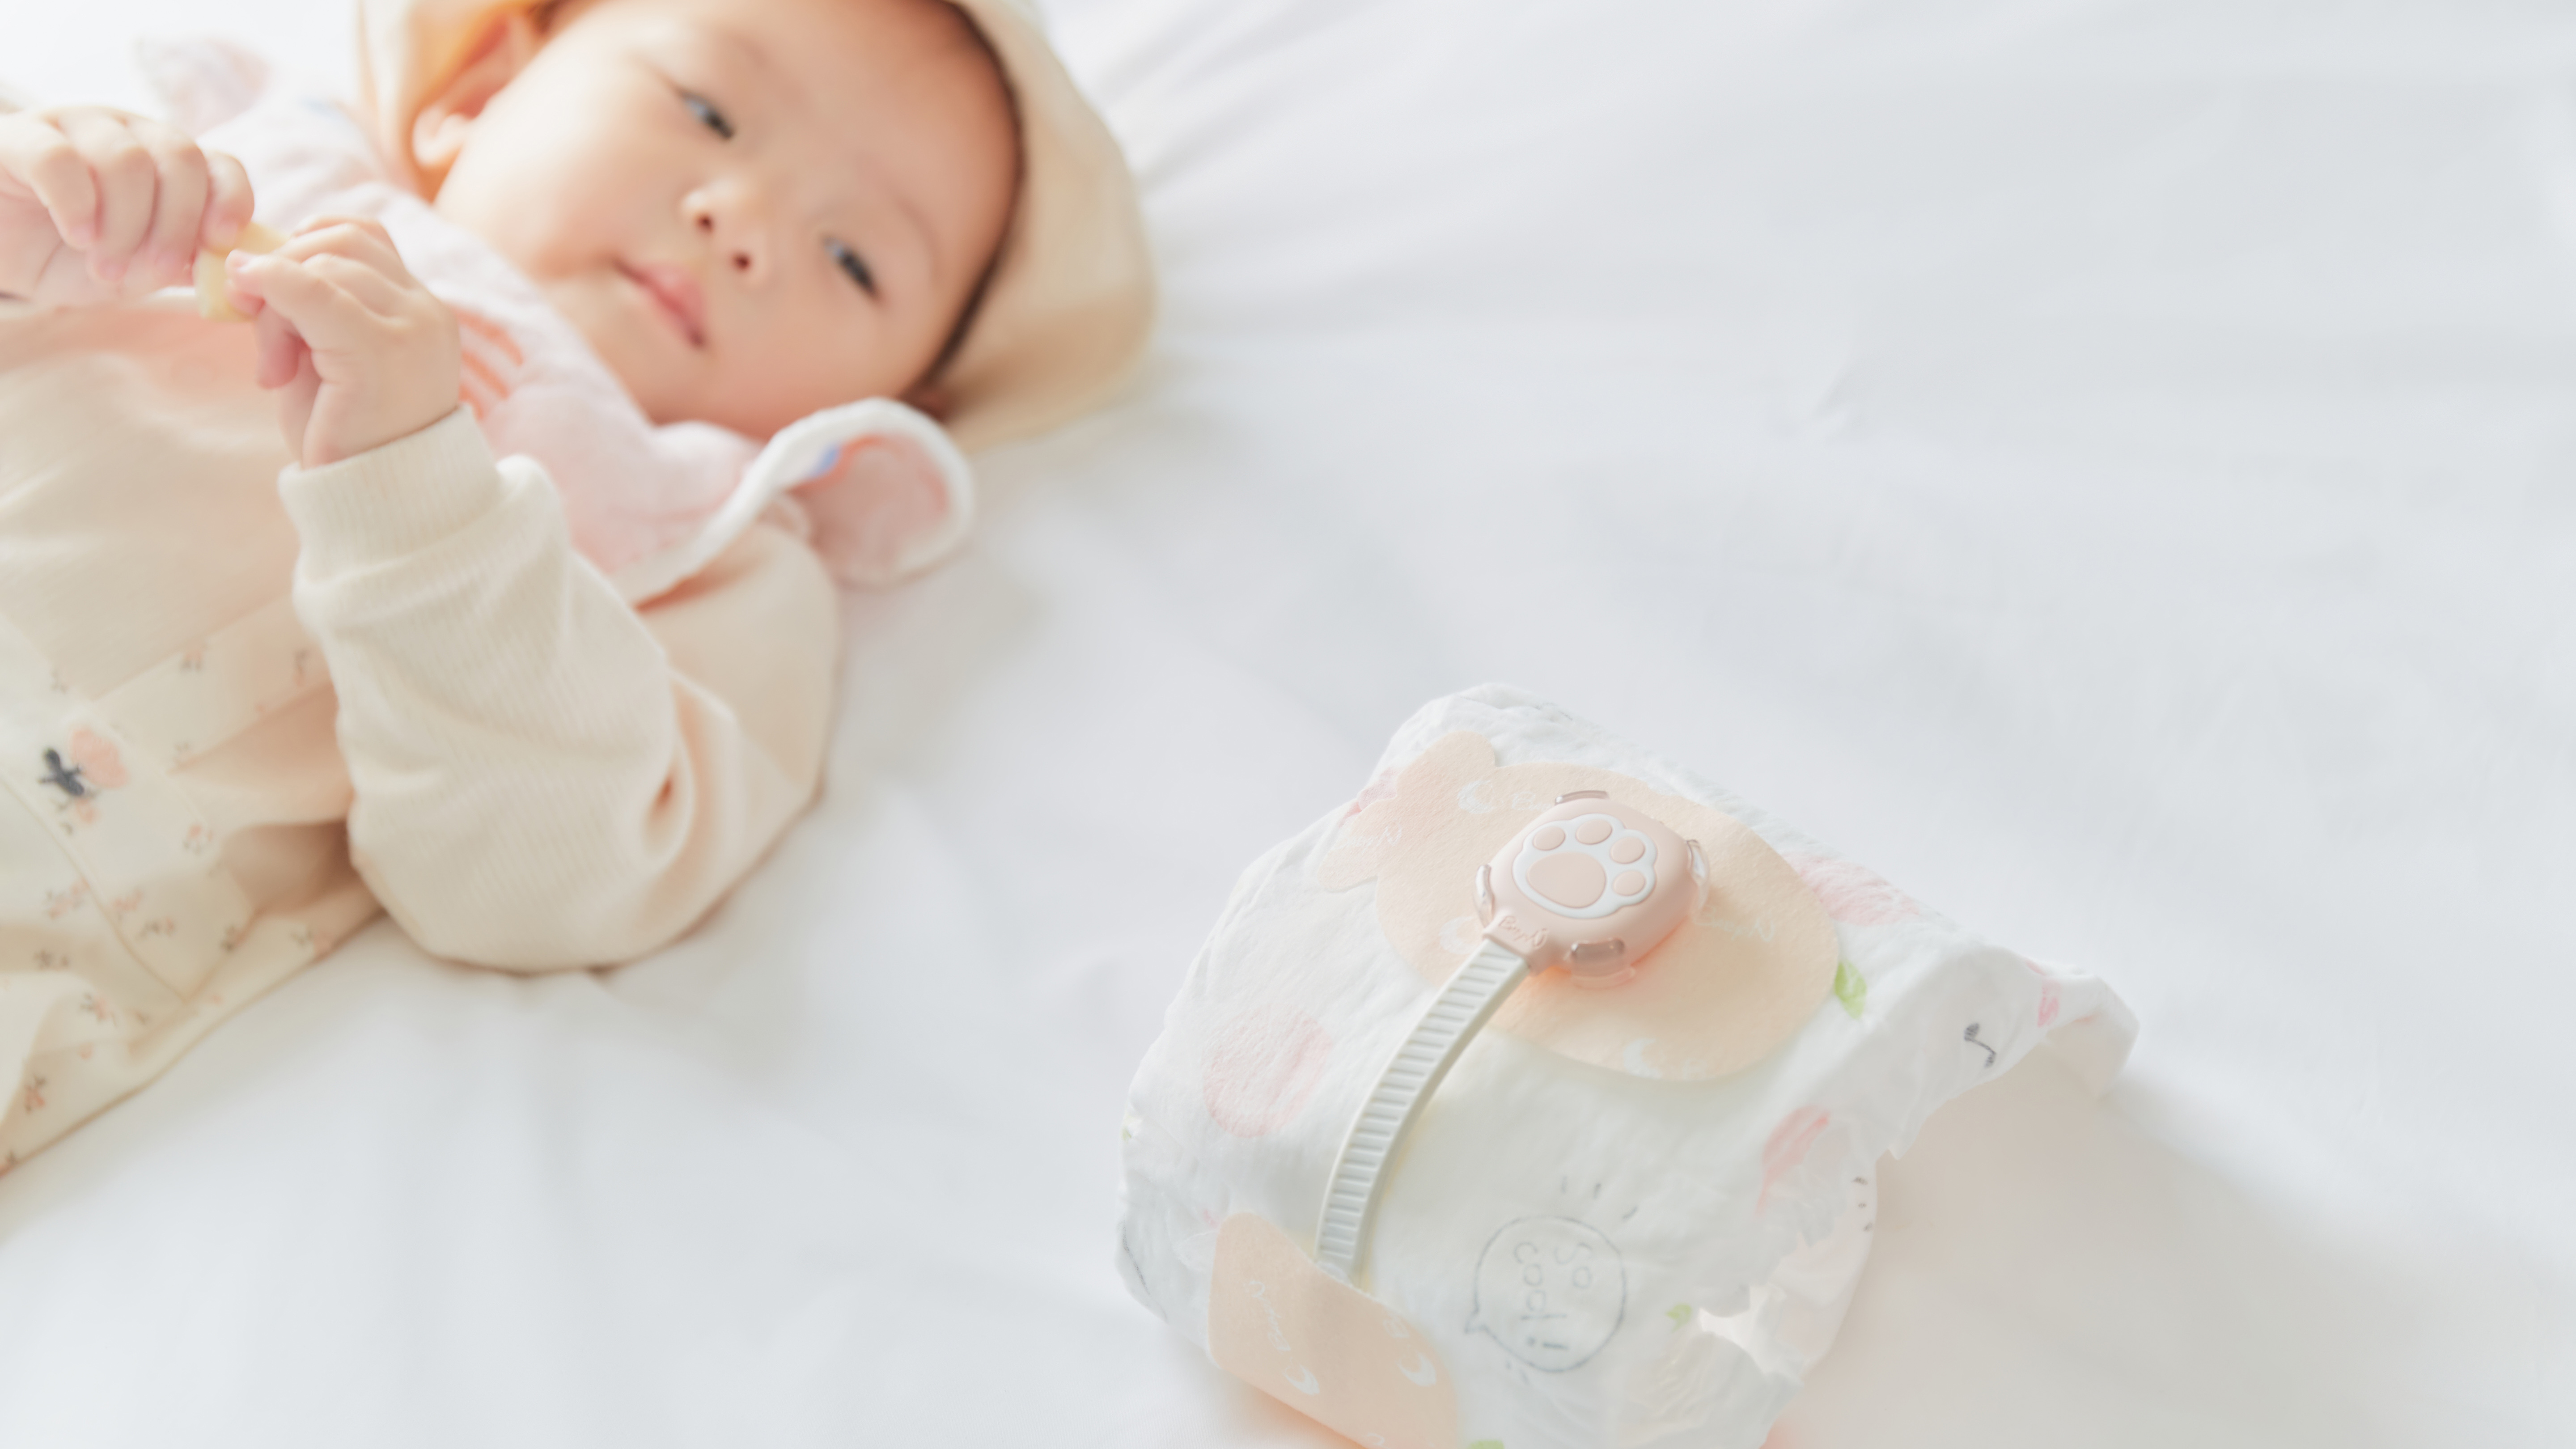 BabyN-Intelligent Diaper Monitor